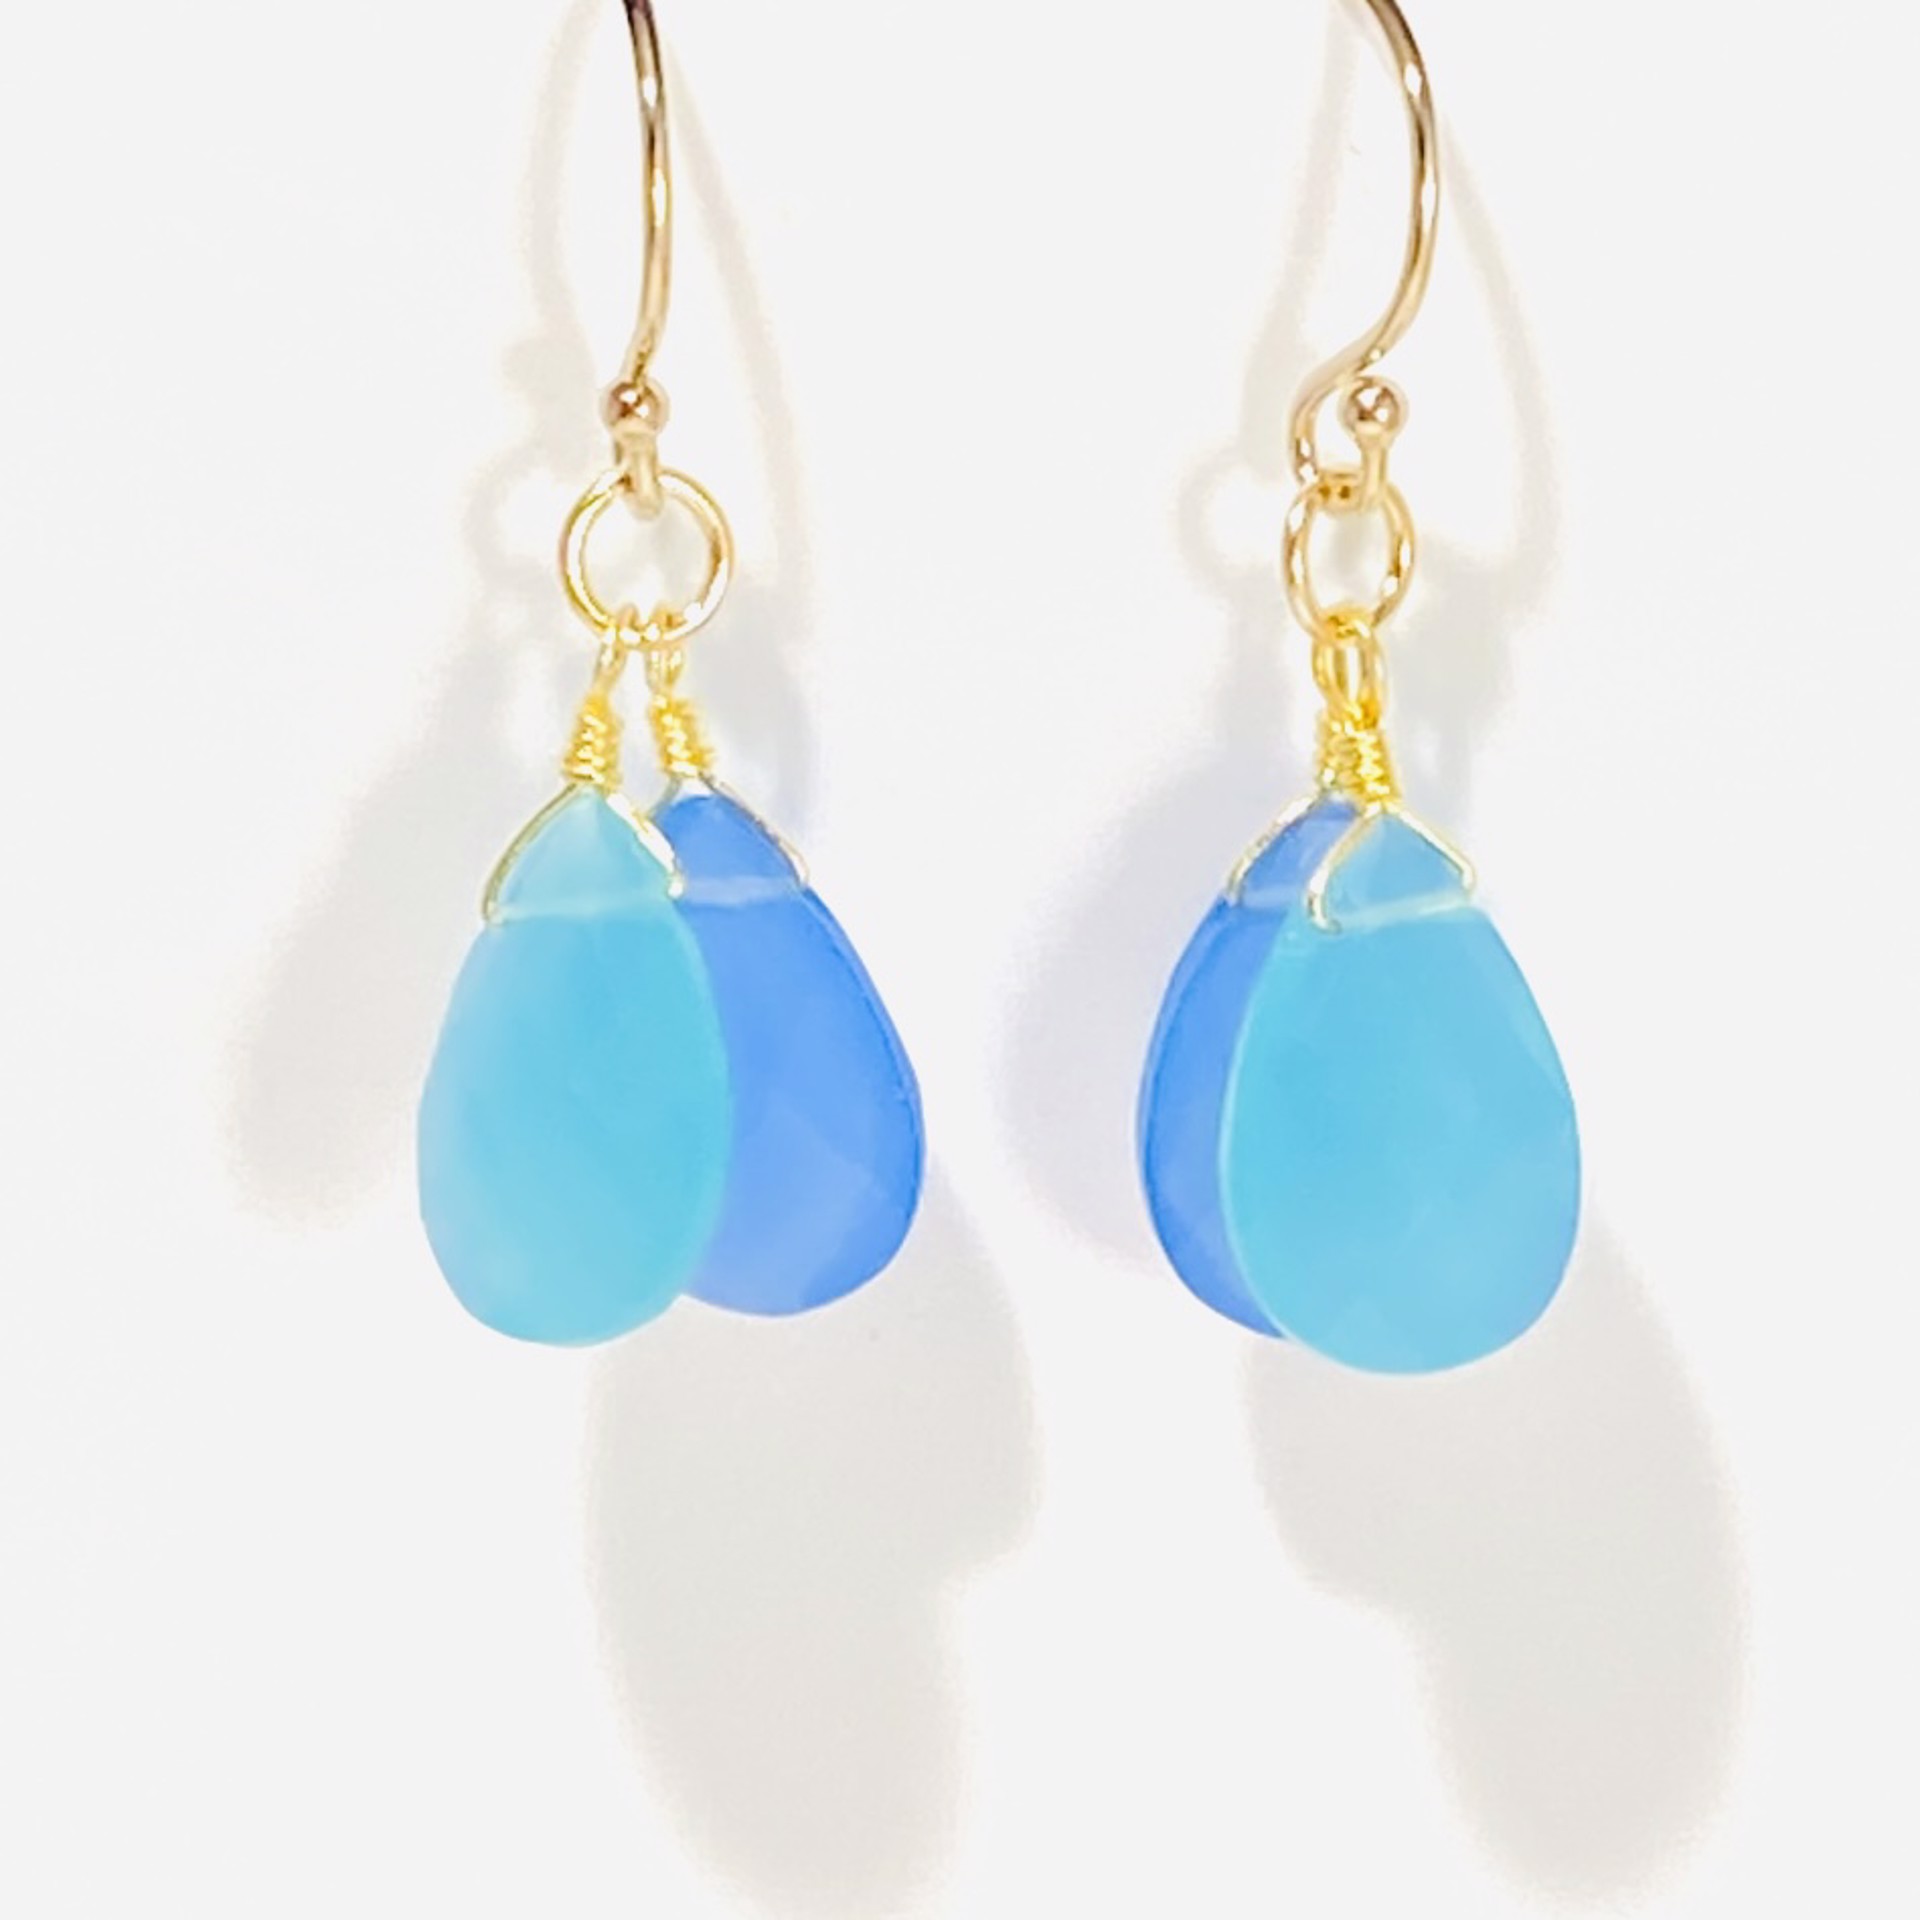 Aqua and Blue Quartz Teardrop Earring by Nance Trueworthy